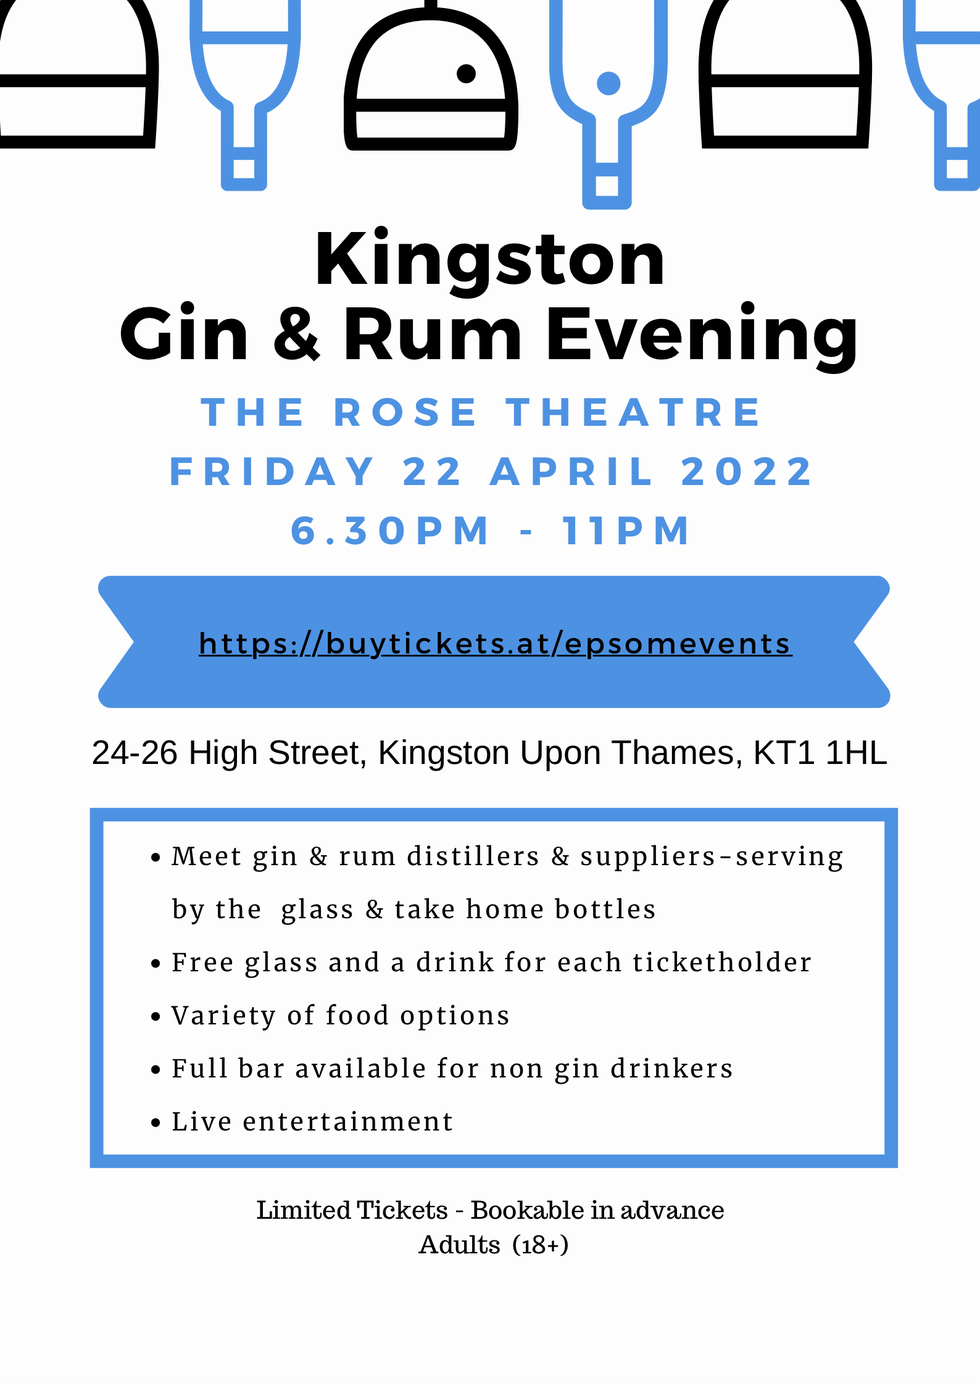 Kingston gin 2022.png